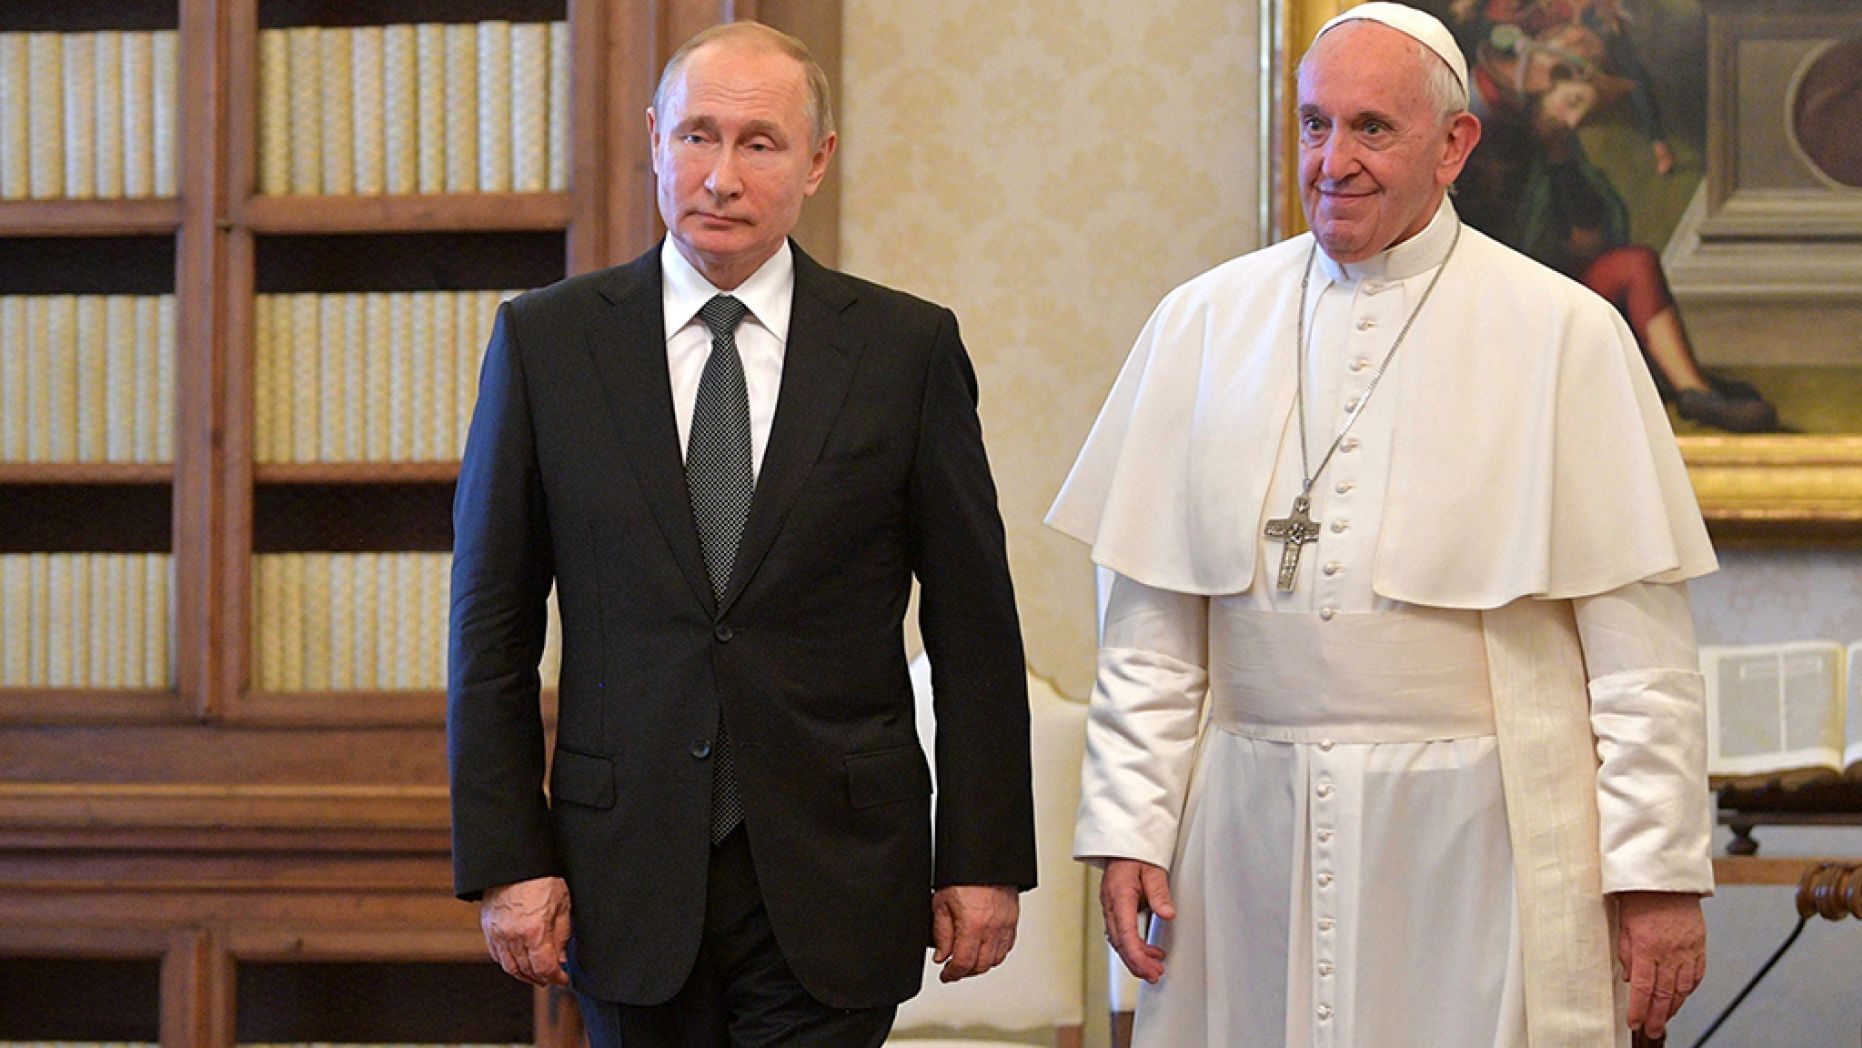 Pope Francis and Putin meet at Vatican, discuss Syria, Ukraine